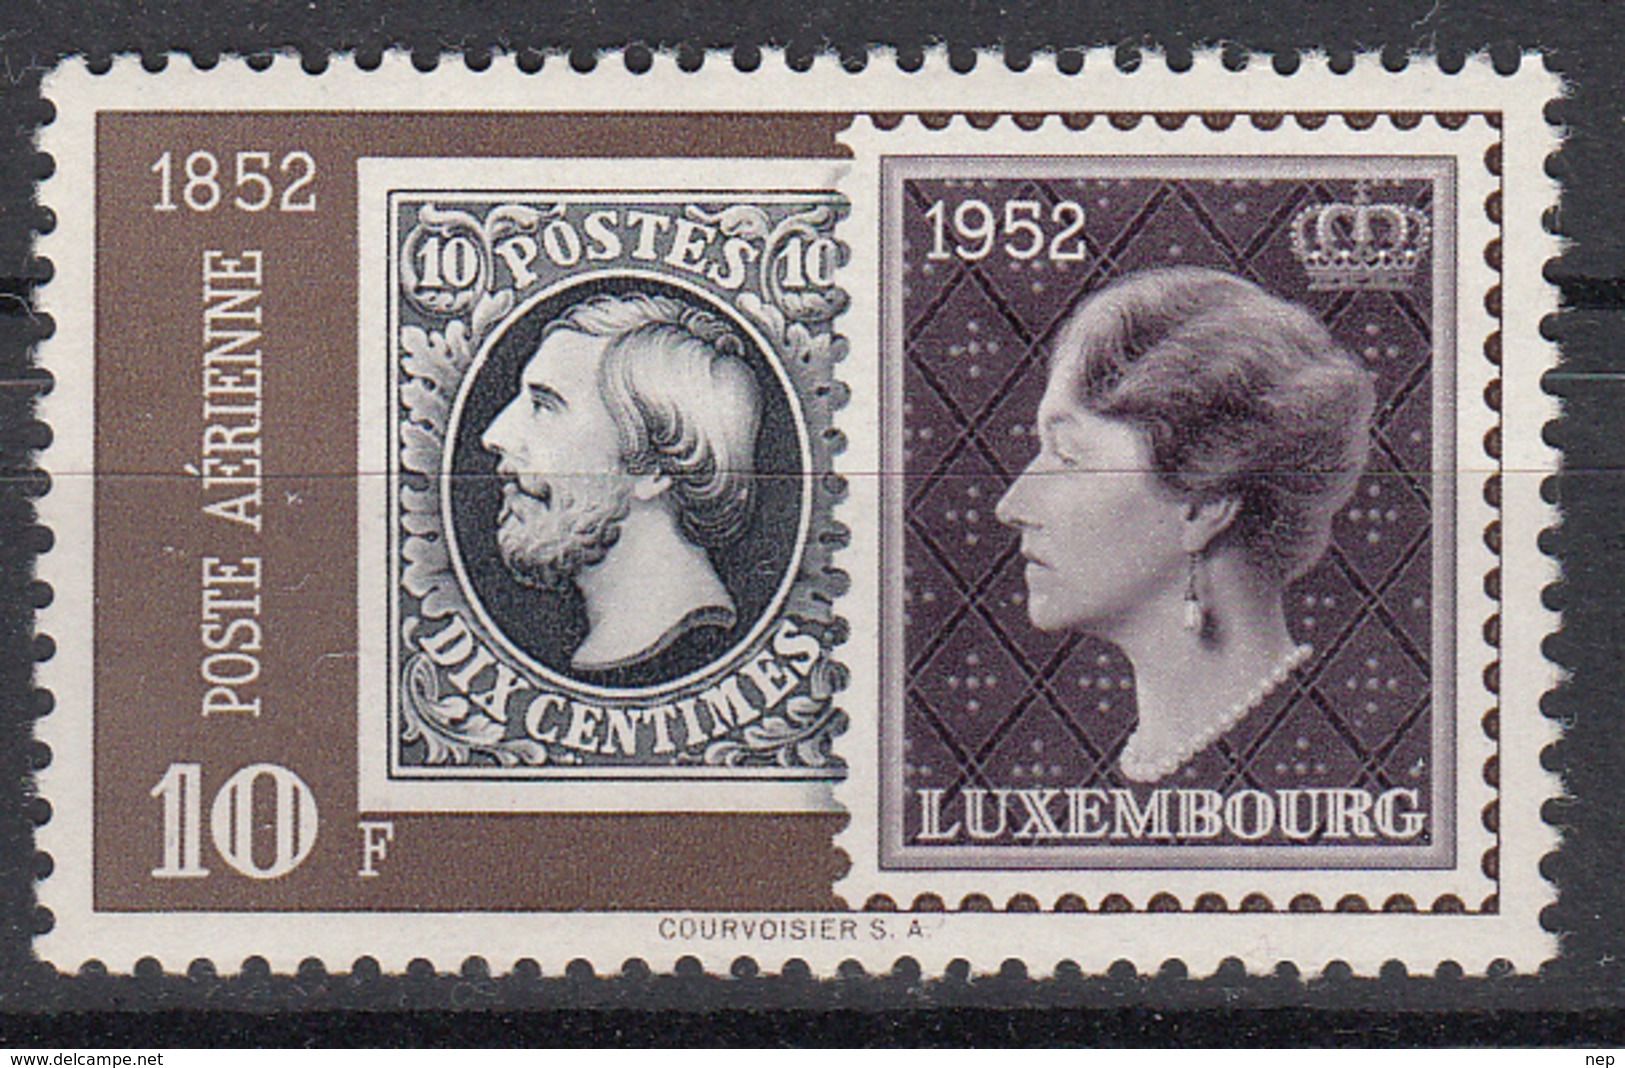 LUXEMBURG - Michel - 1952 - Nr 494 - MNH** - Unused Stamps